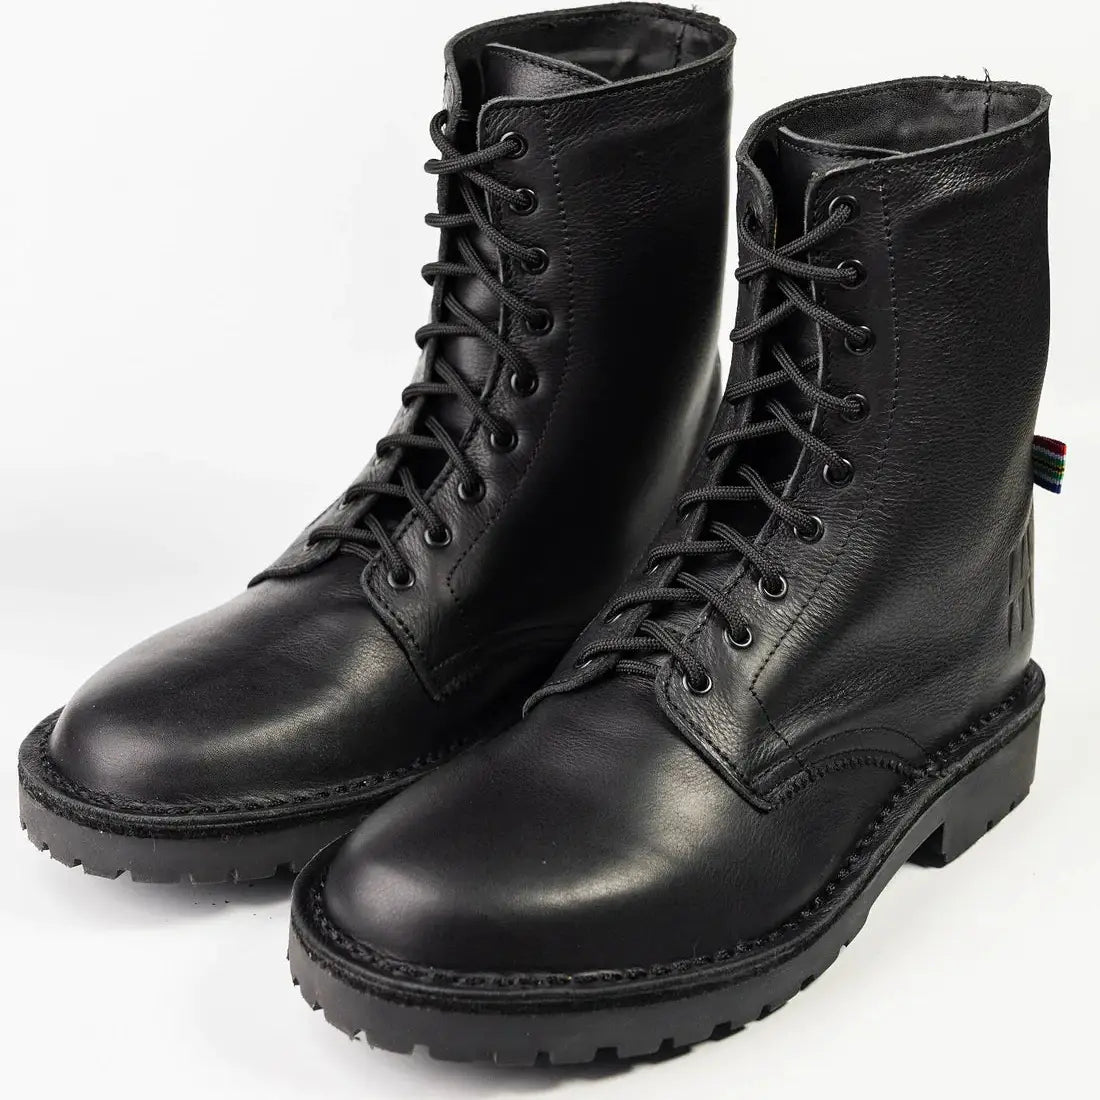 Ranger Boots - Black Leather